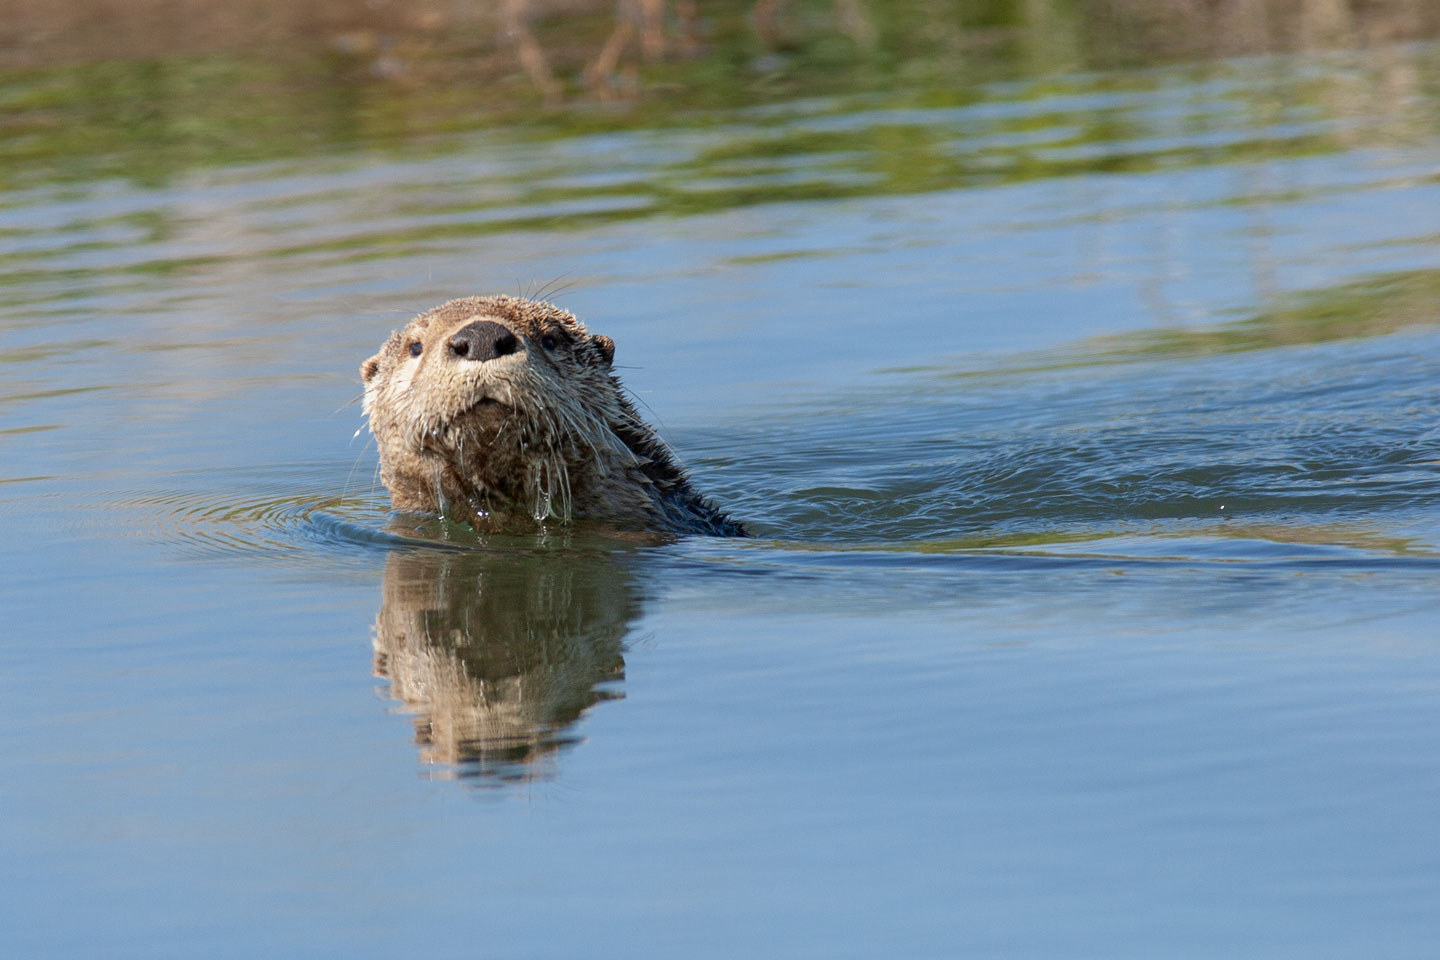 Read More: River otter